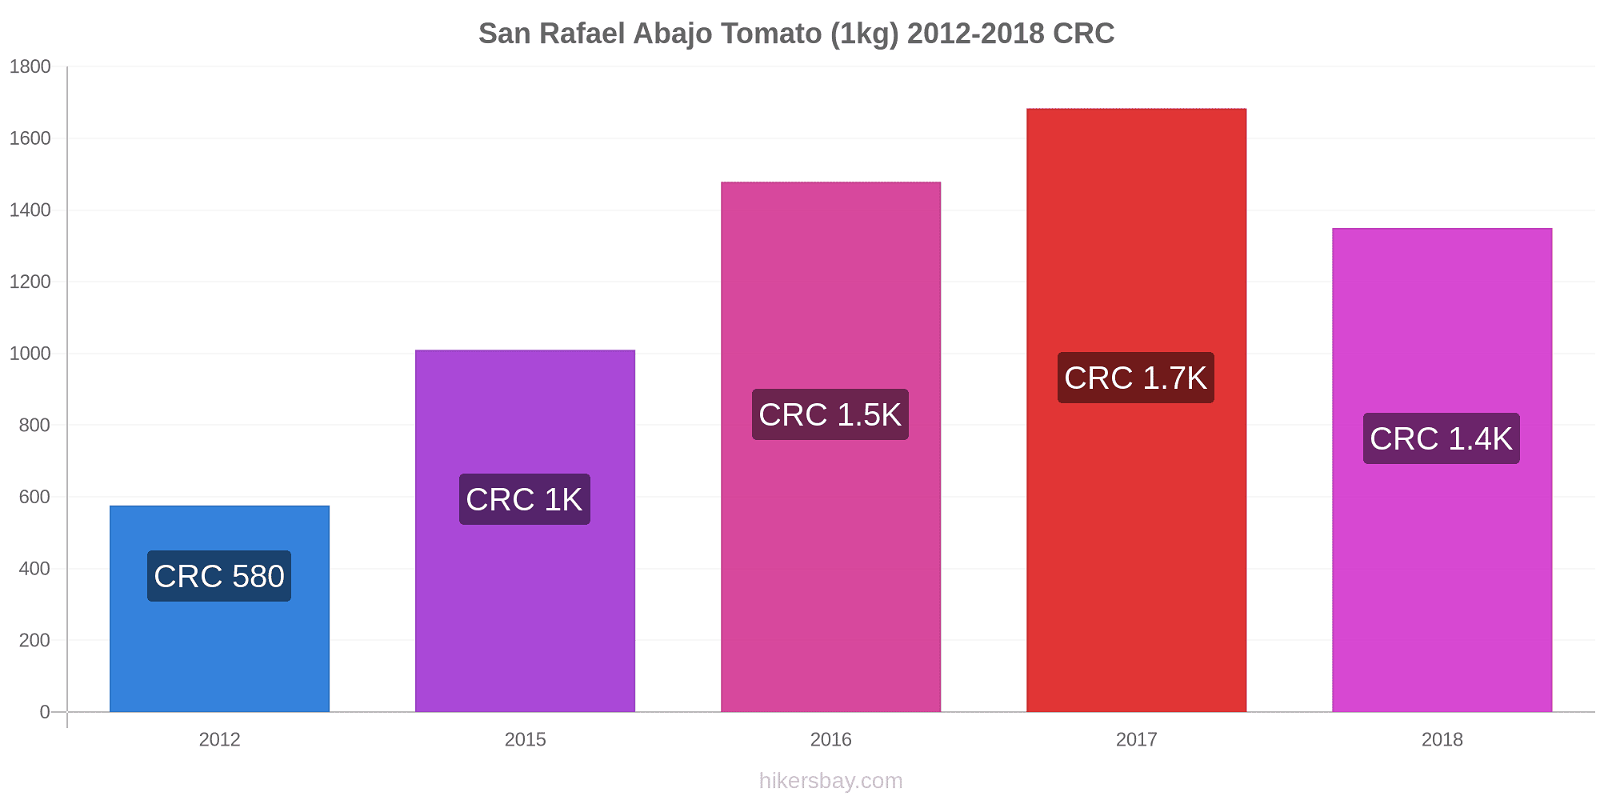 San Rafael Abajo price changes Tomato (1kg) hikersbay.com